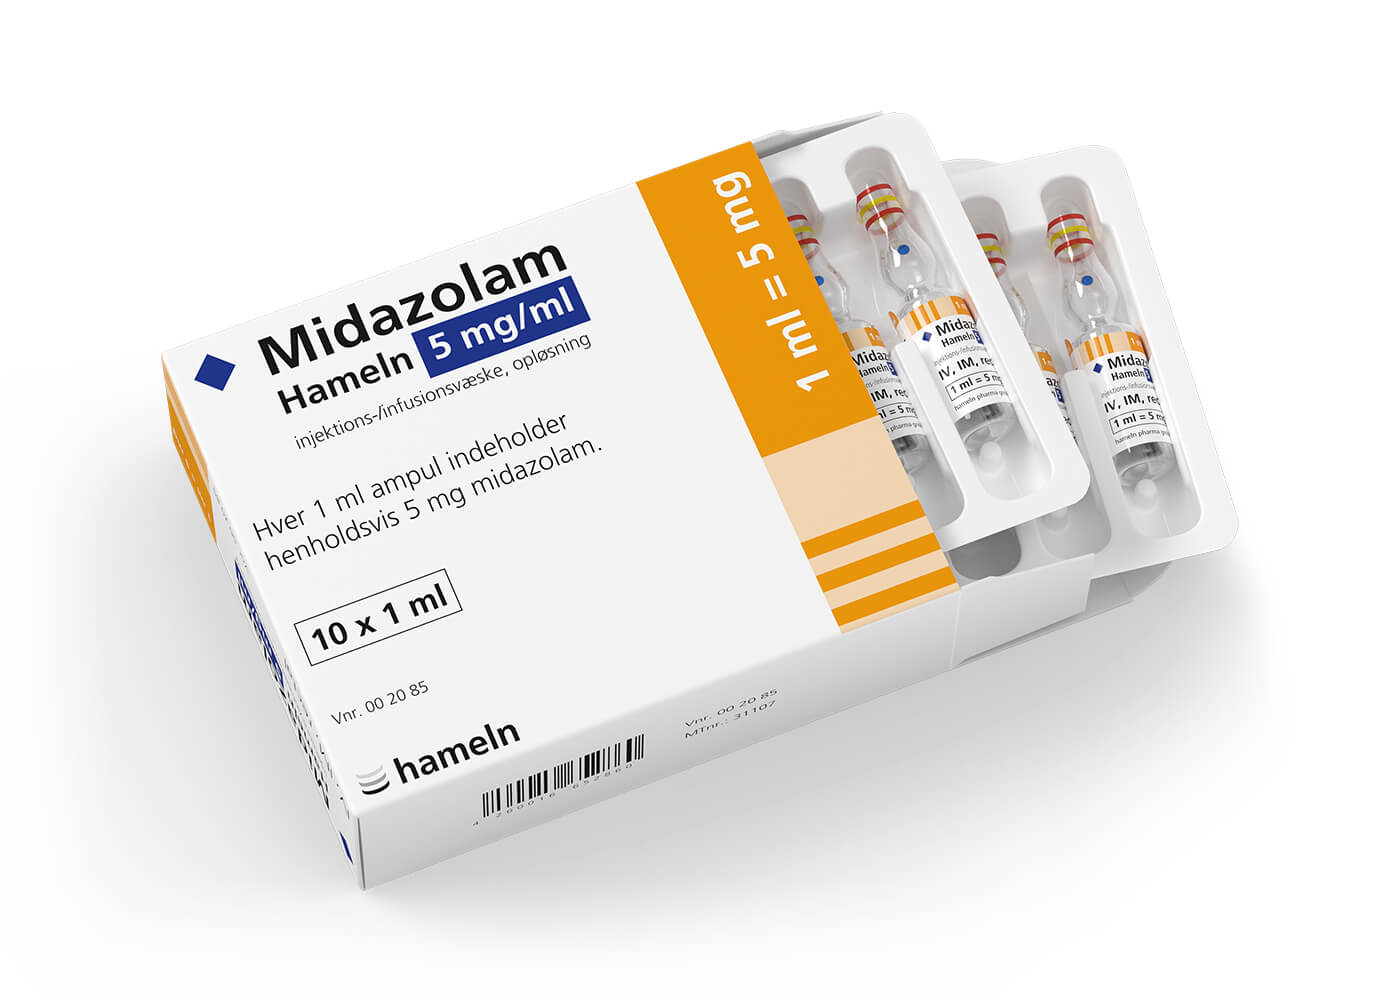 Midazolam_DK_5_mg-ml_in_1_ml_Pack-Amp_10St_2020-03